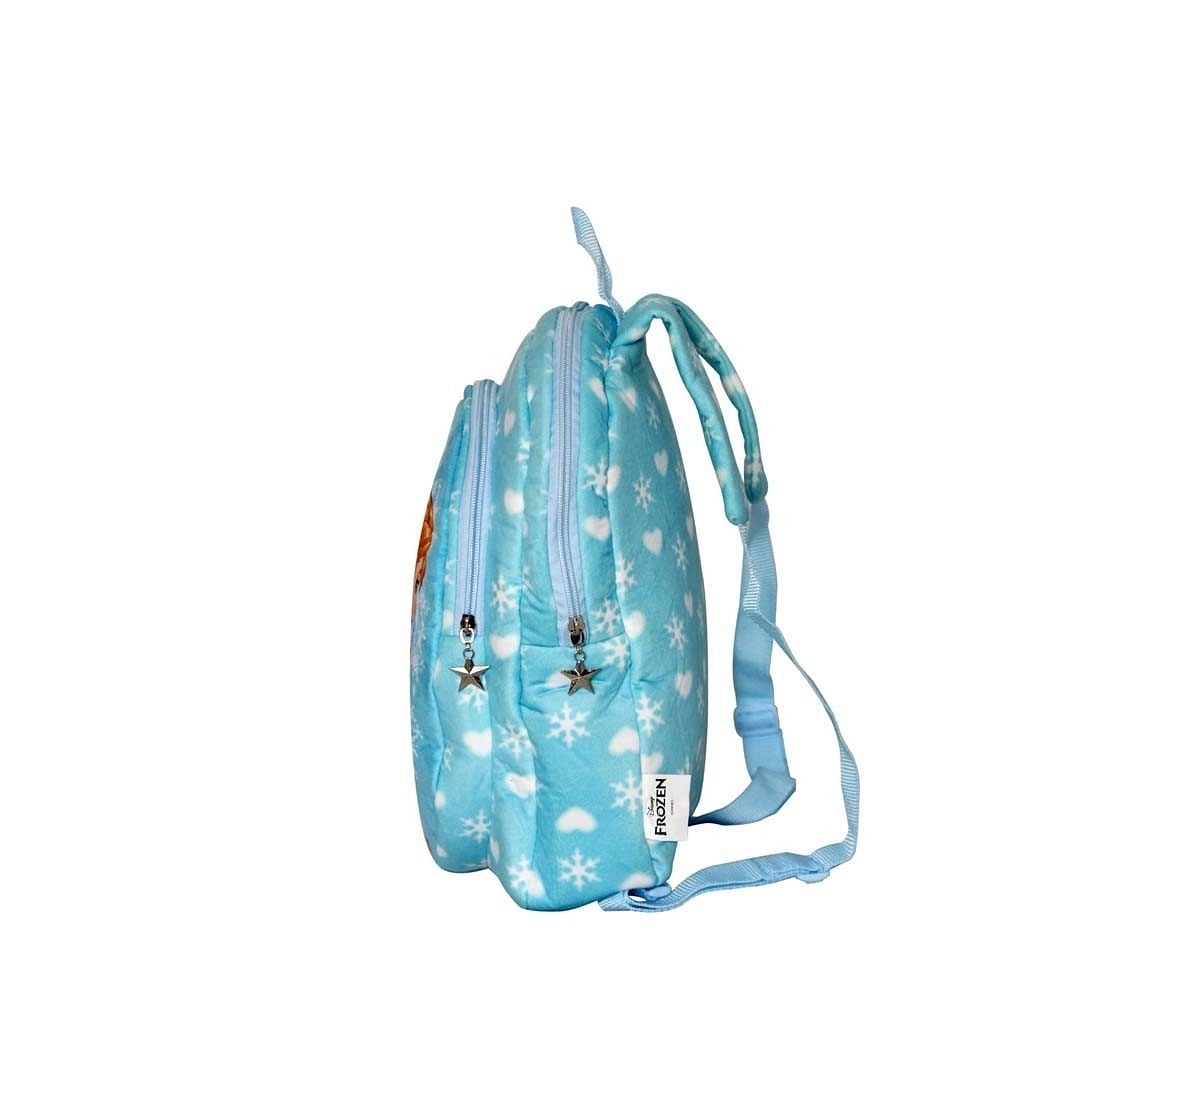  Disney Happiness Zipper Closure Blue Frozen Print Backpack Free Size Plush Accessories for Kids age 12M+ 35 Cm 